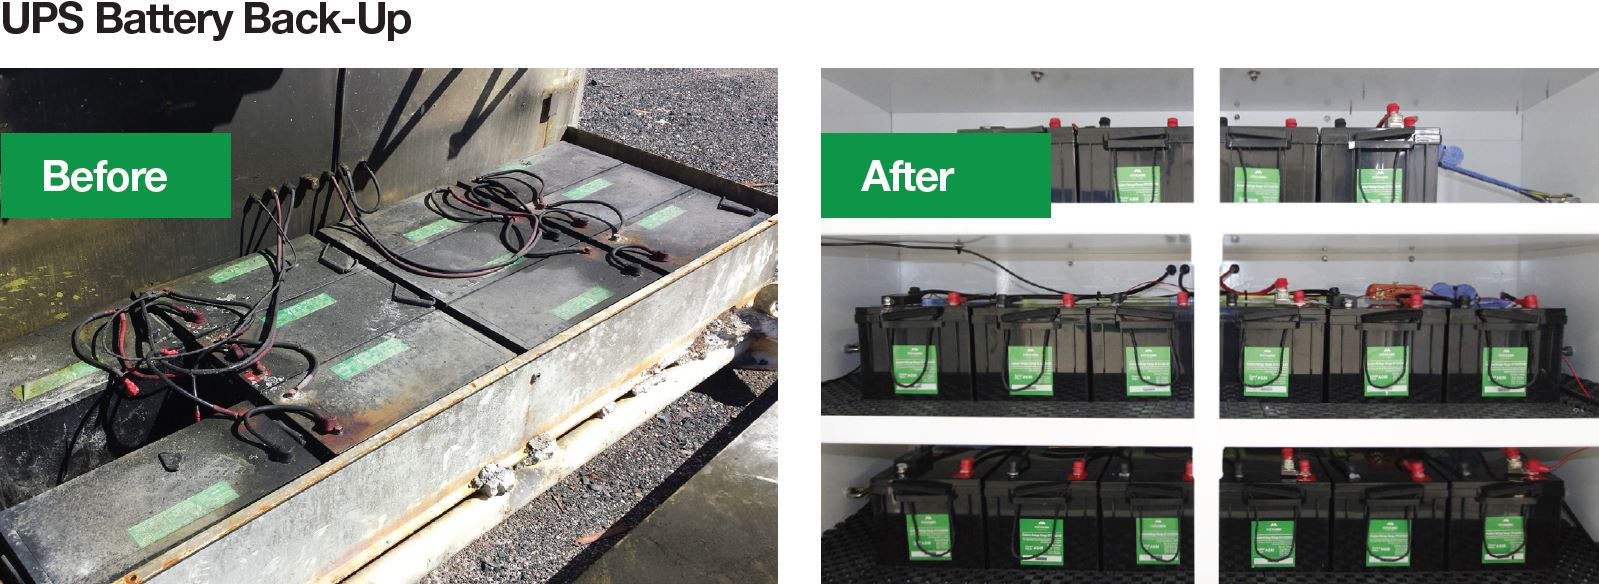 UPS battery back-up_chamber refurbishment